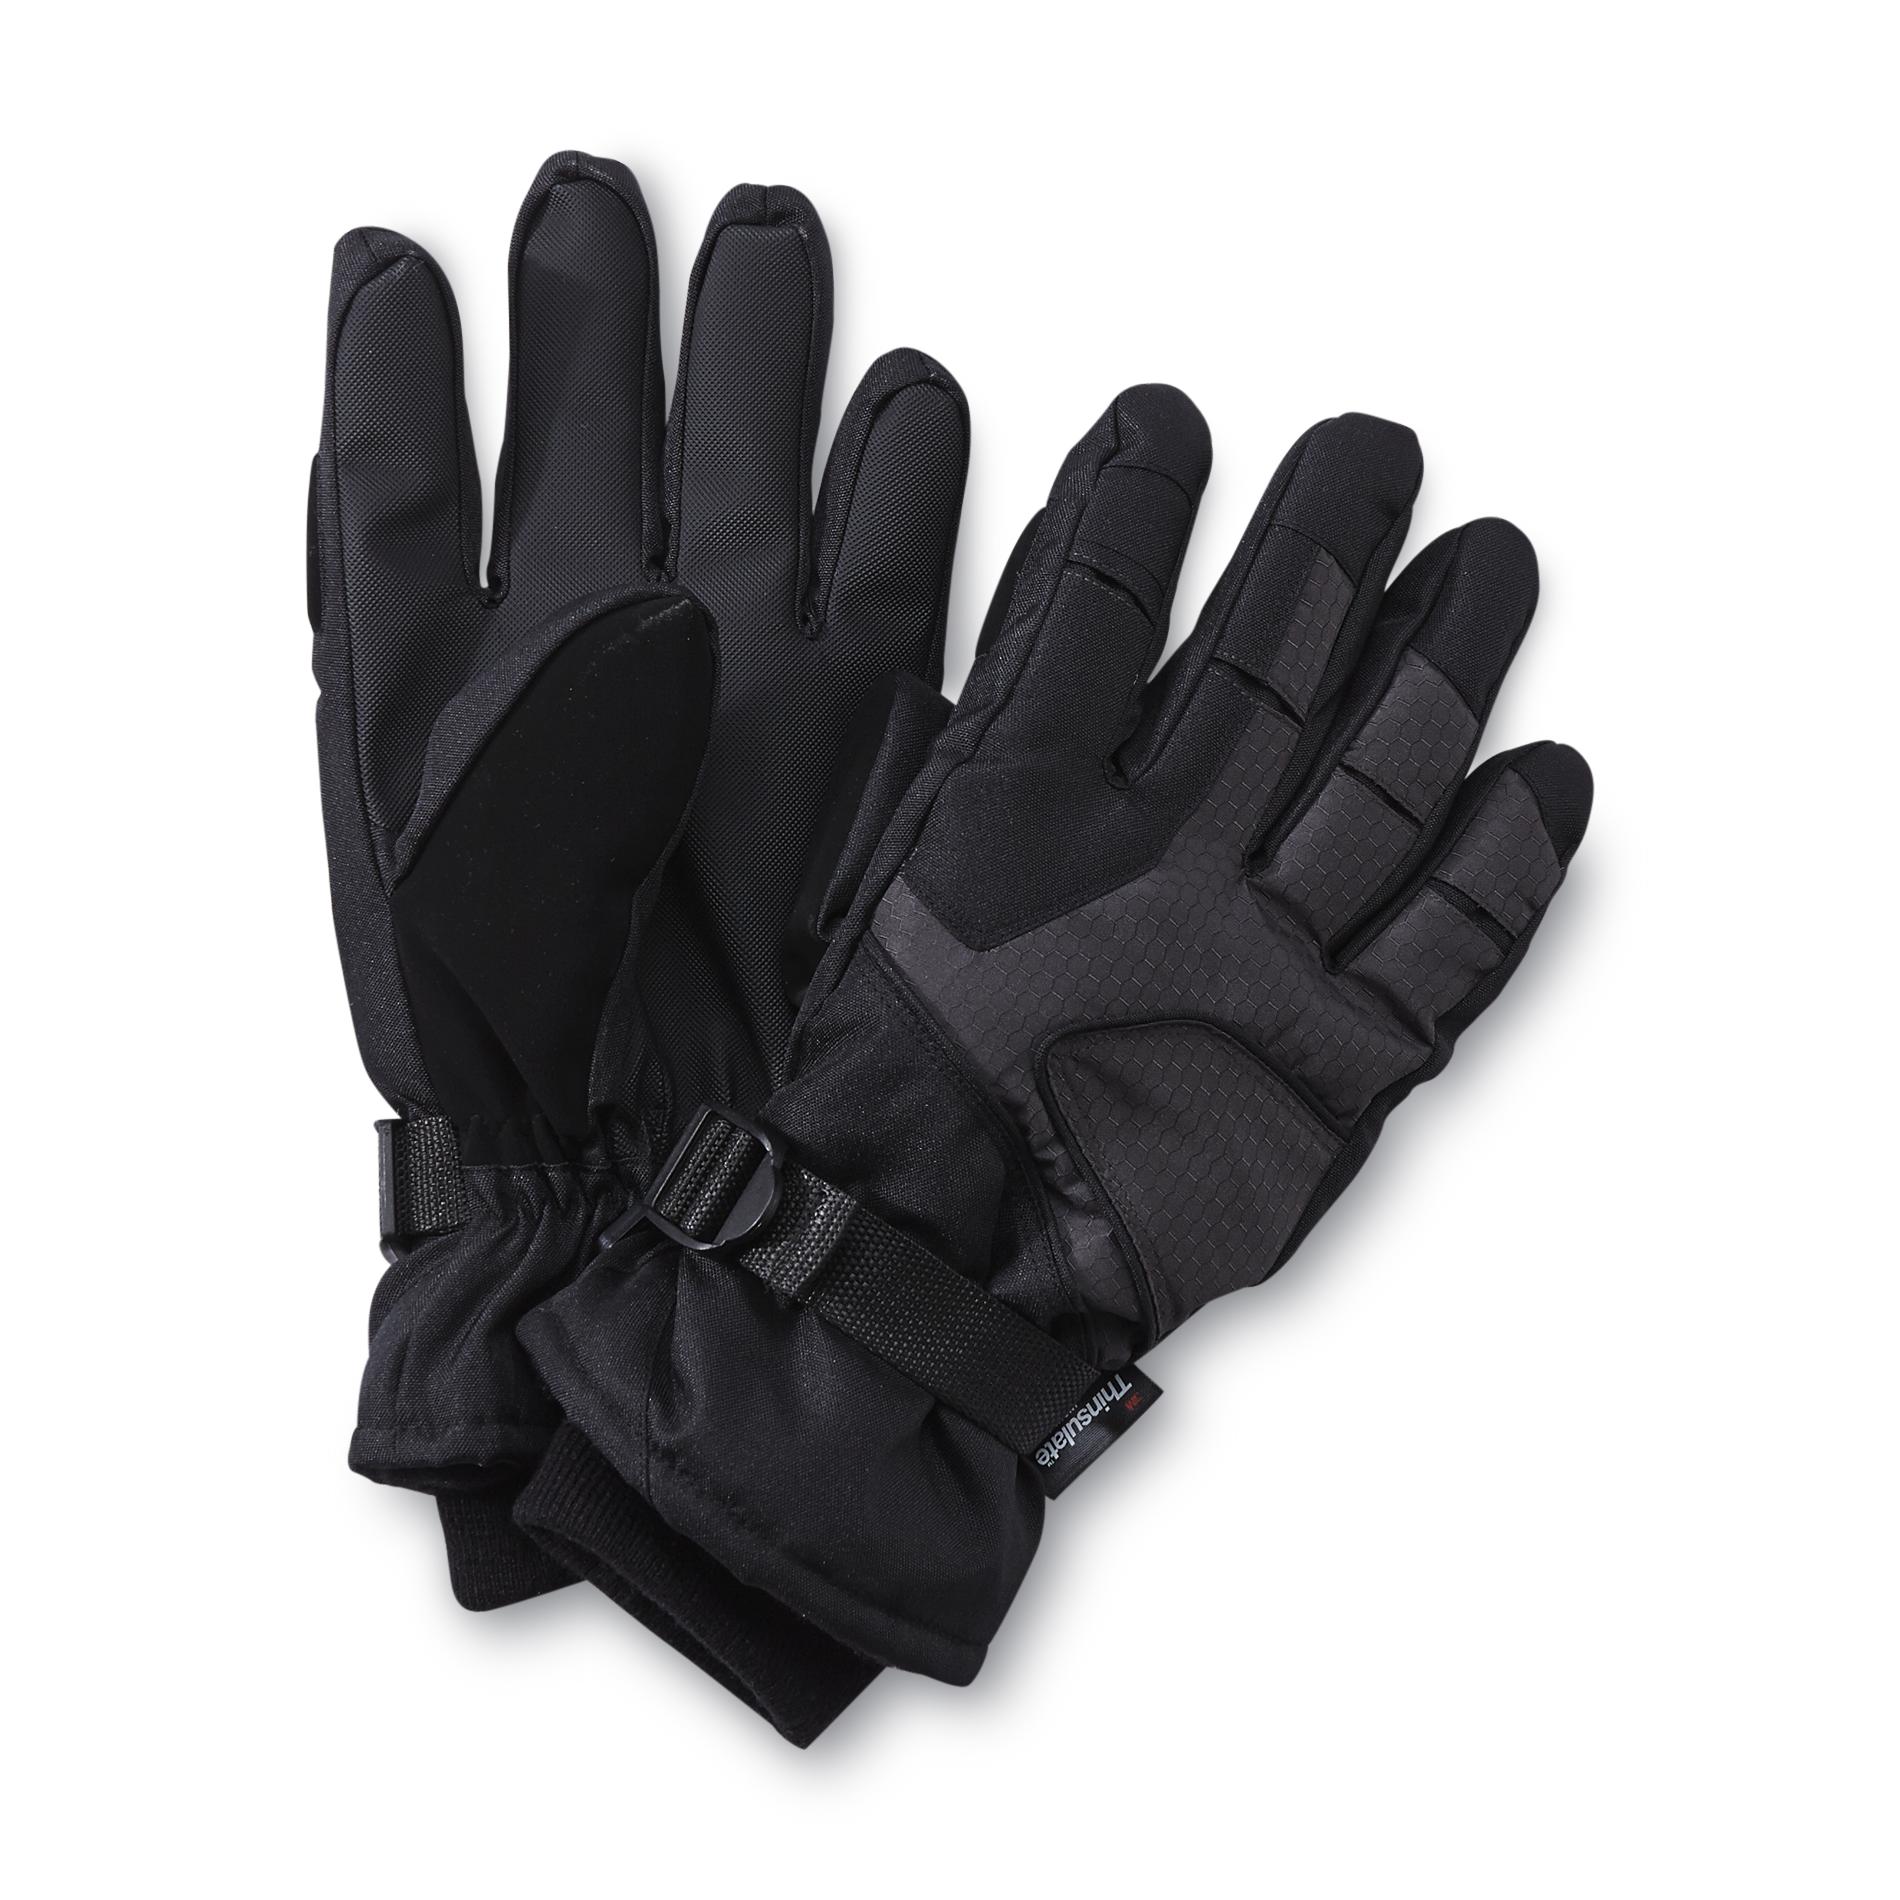 NordicTrack Men's Ski Gloves